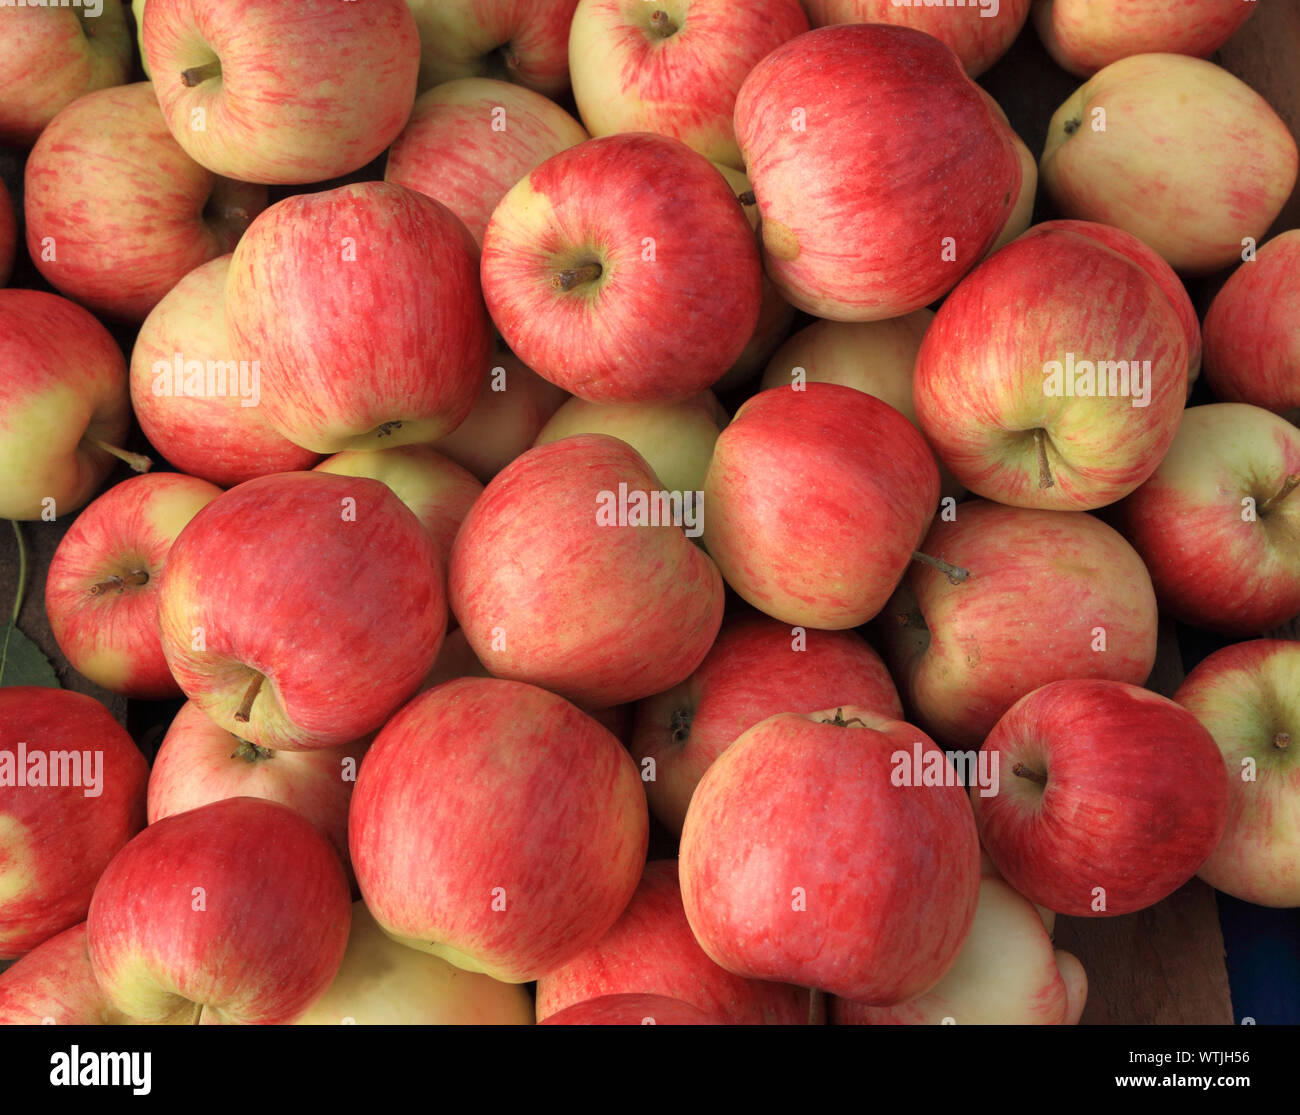 Apple uffolk Pink', Äpfel, Äpfel, gesunde Ernährung, Hofladen Anzeige Stockfoto